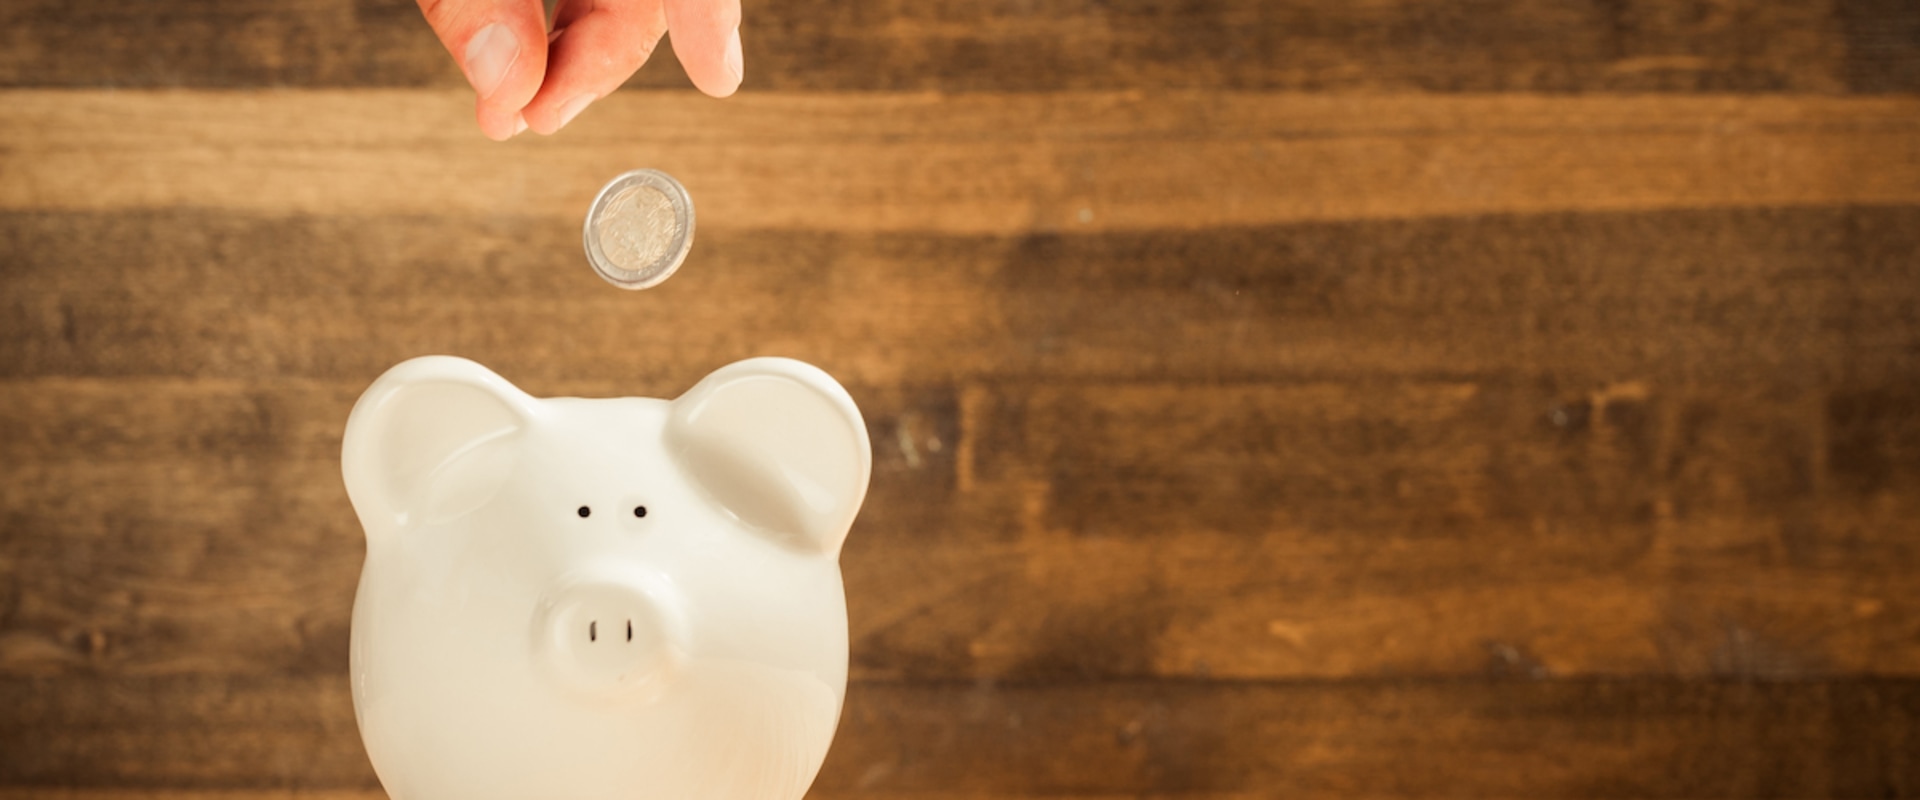 Using Mint's Financial Analysis Tools to Maximize Savings